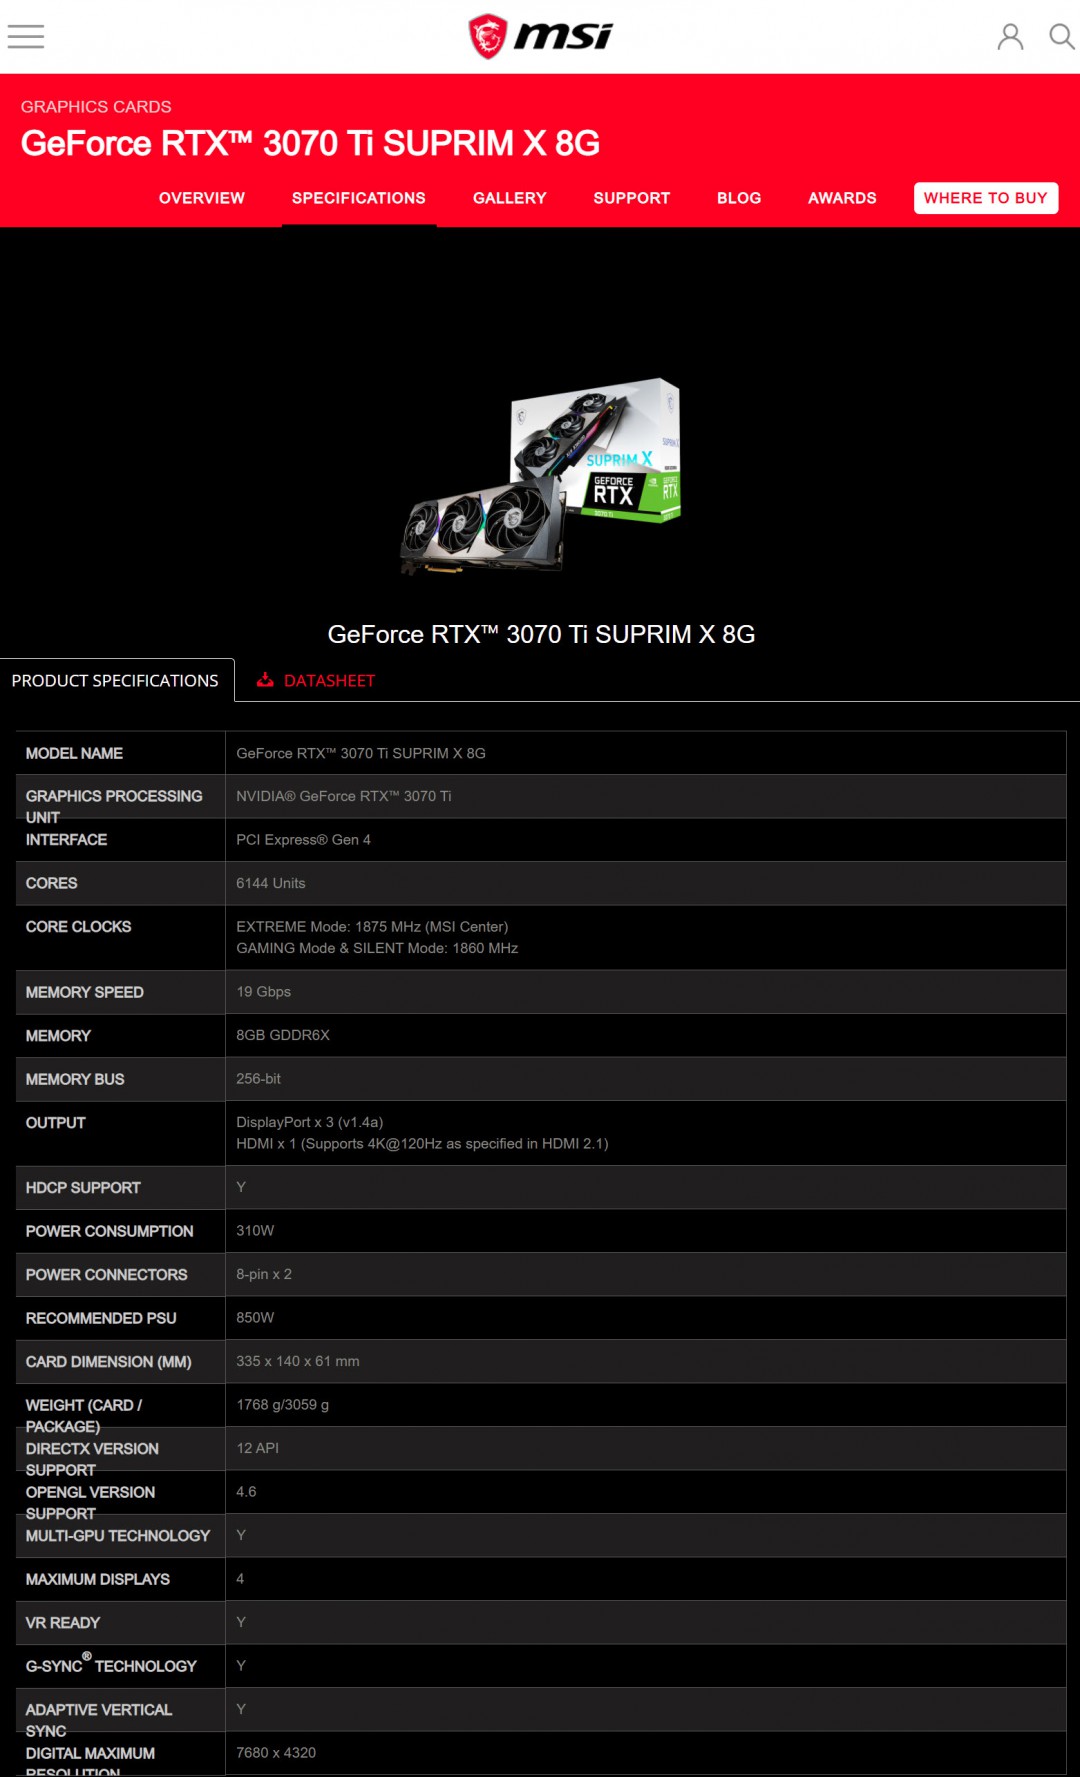 2021 06 28 21 22 03 MSI GeForce RTX 3070 Ti SUPRIM X 8G Review